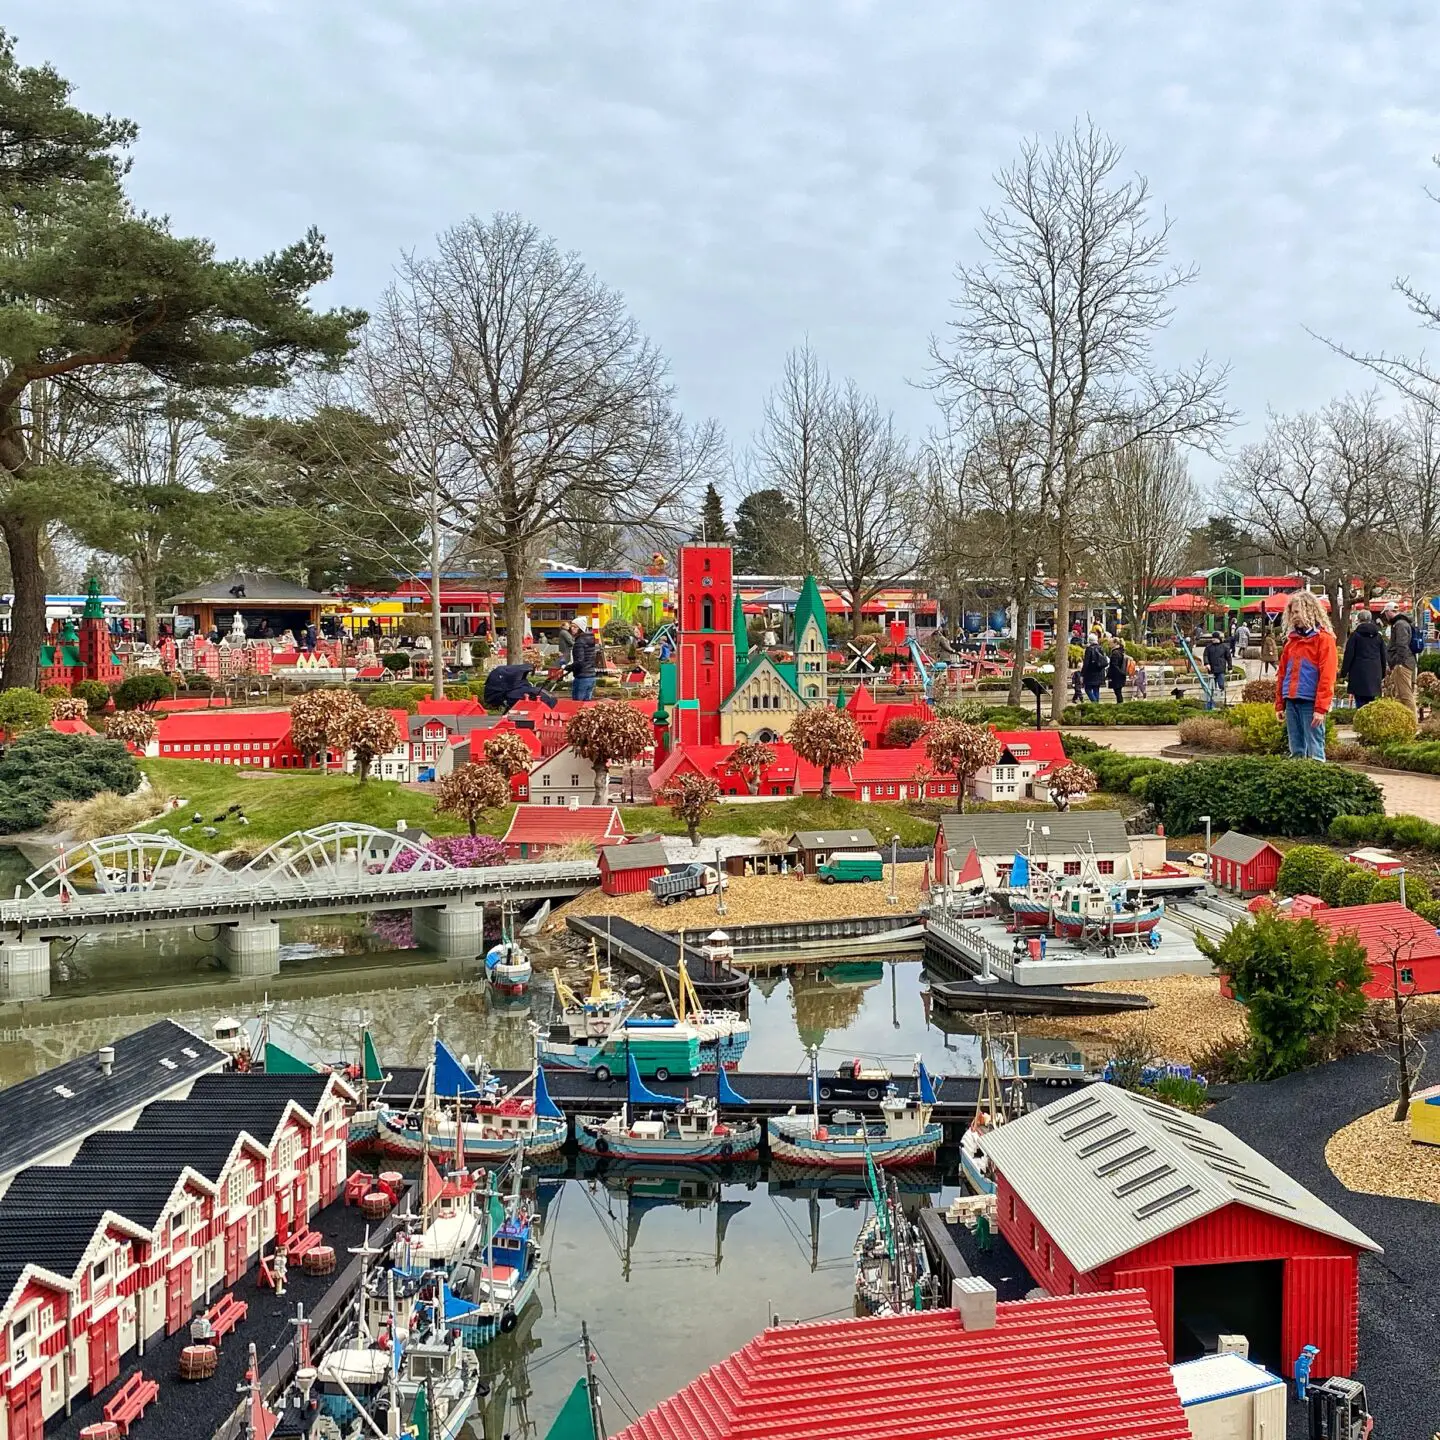 Miniland at Legoland Billund